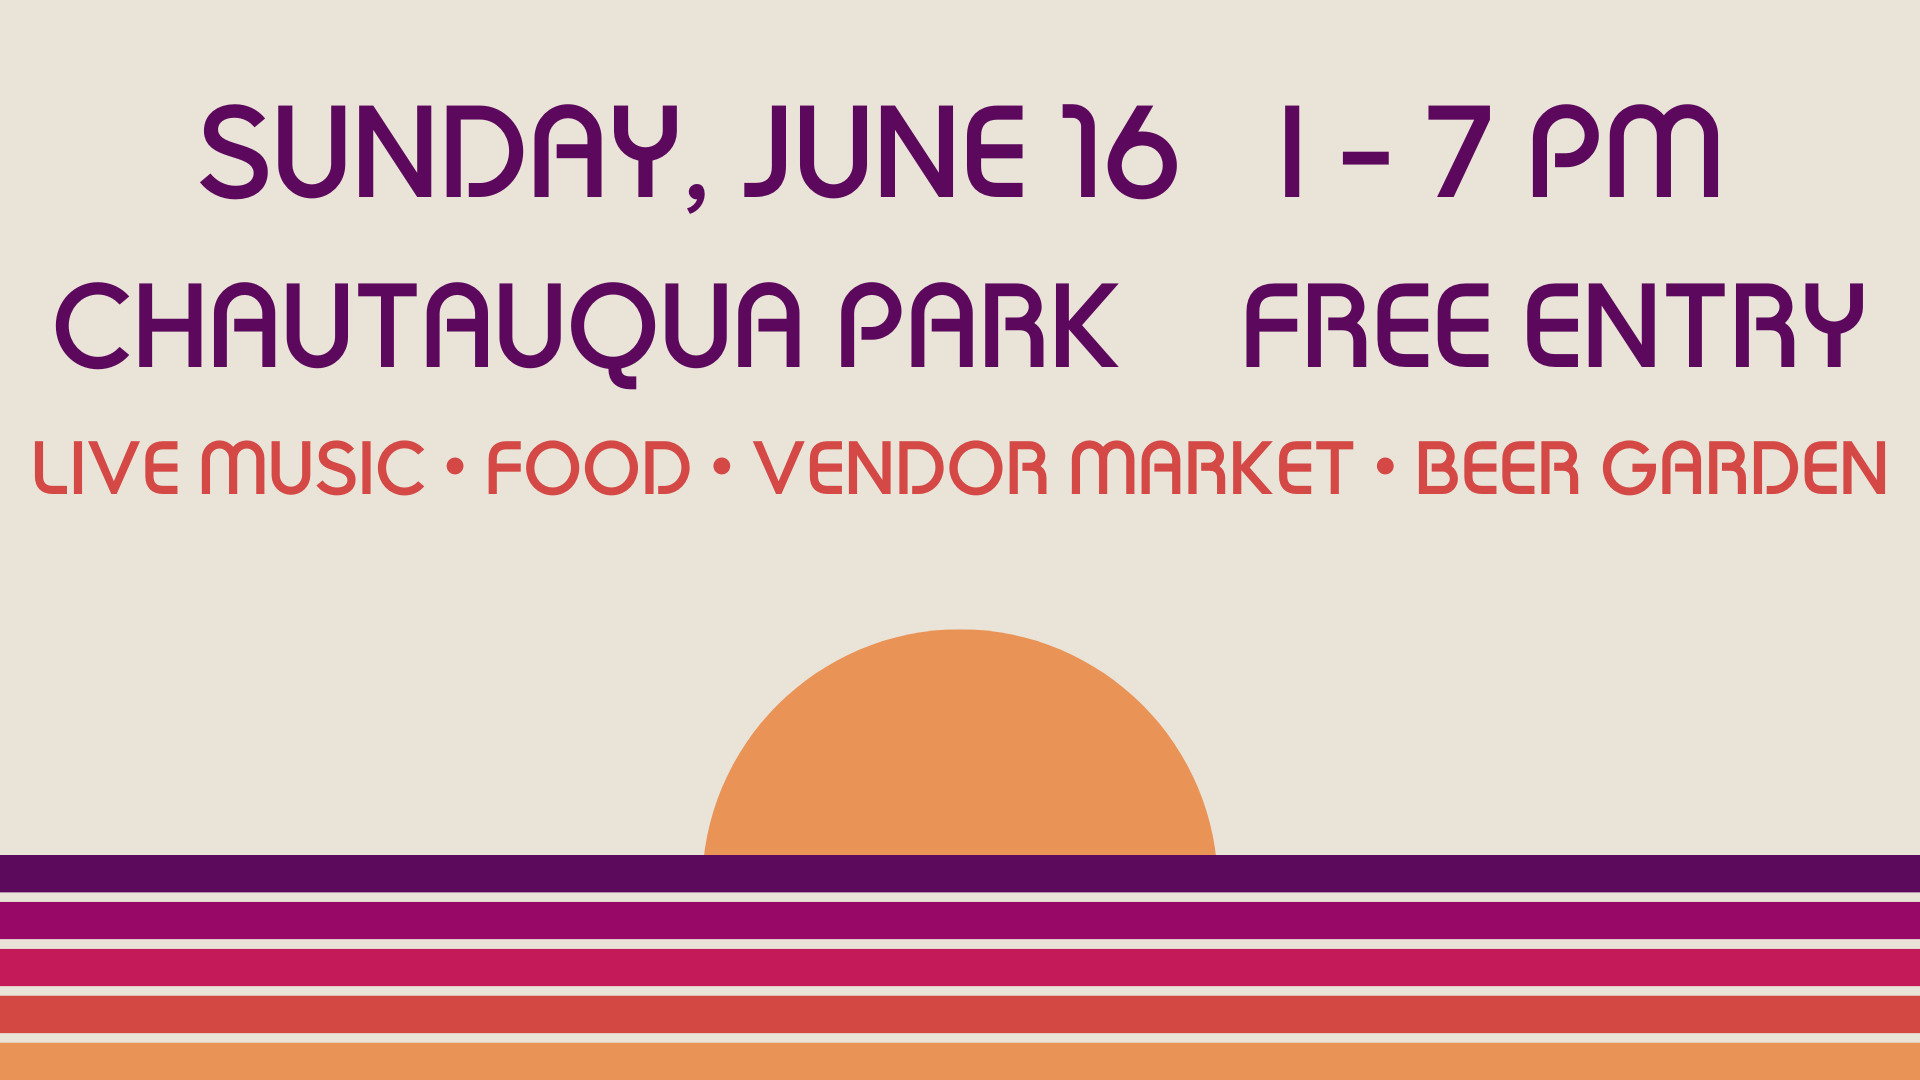 Flatiron Sounds Music Festival Sunday, June 1 - 7 Chautauqua Park. Free entry. Live Music, food, vendor market, Beer Garden